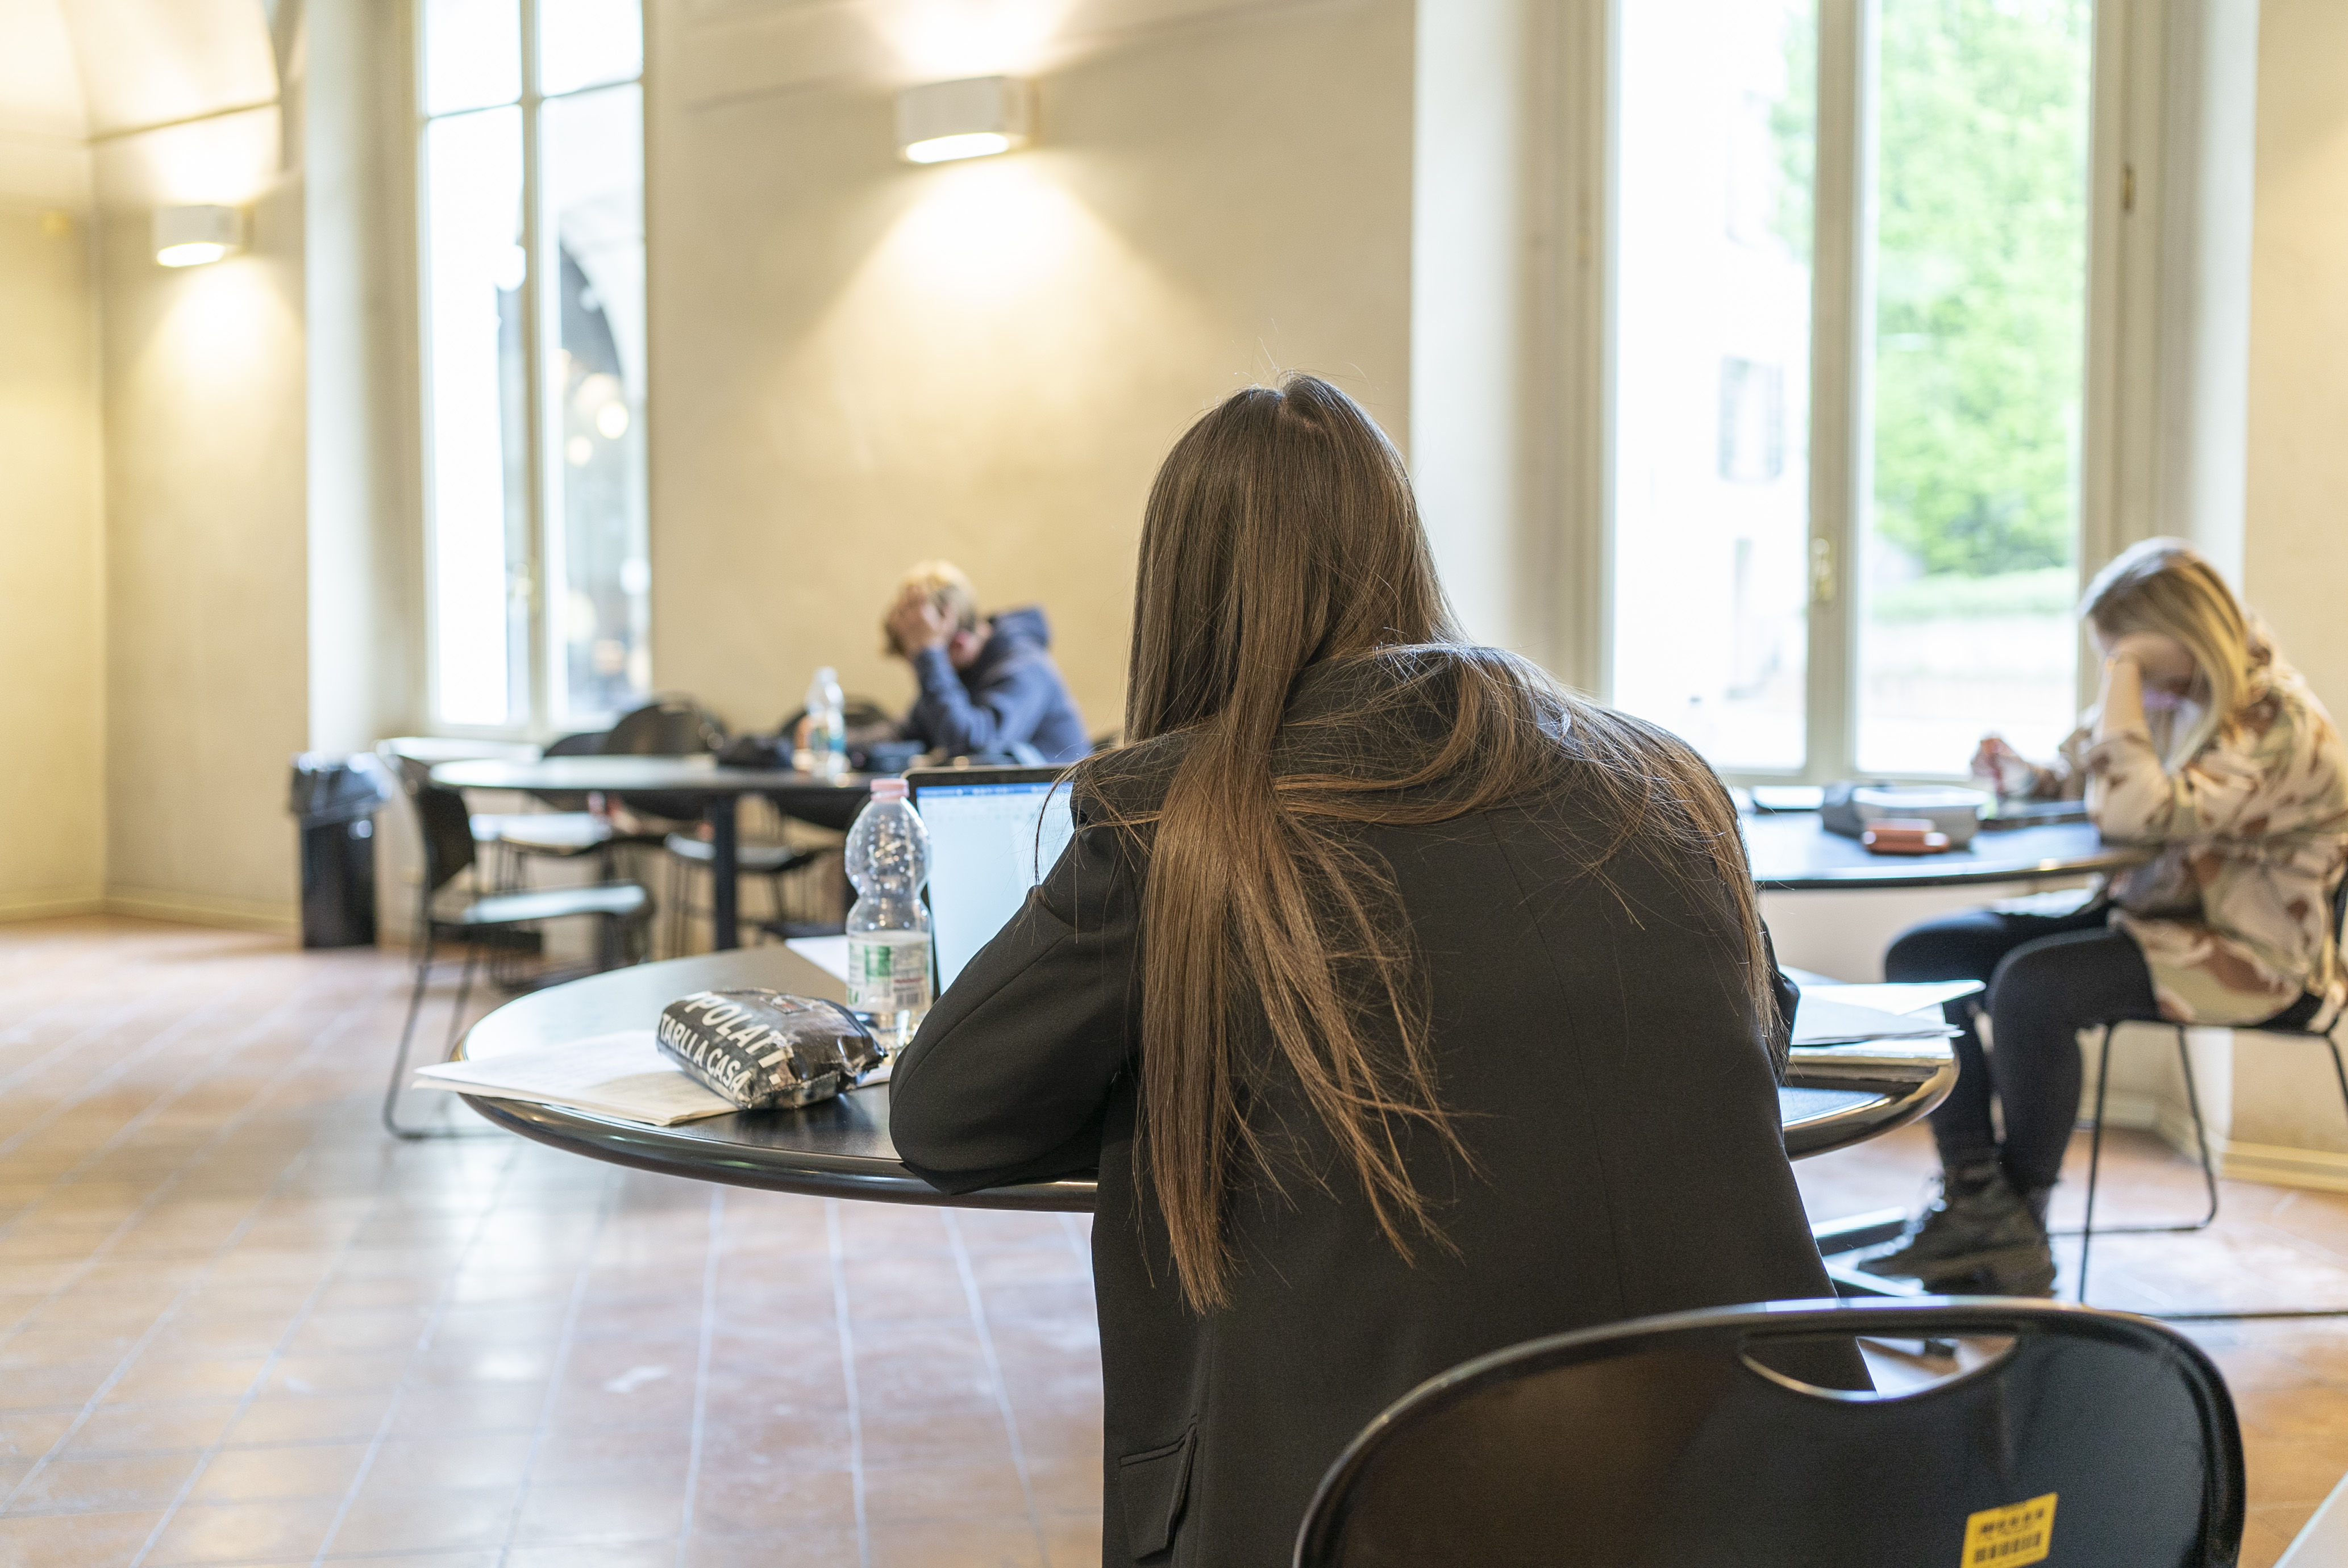 Studentessa in aula studio seduta ad un tavolo